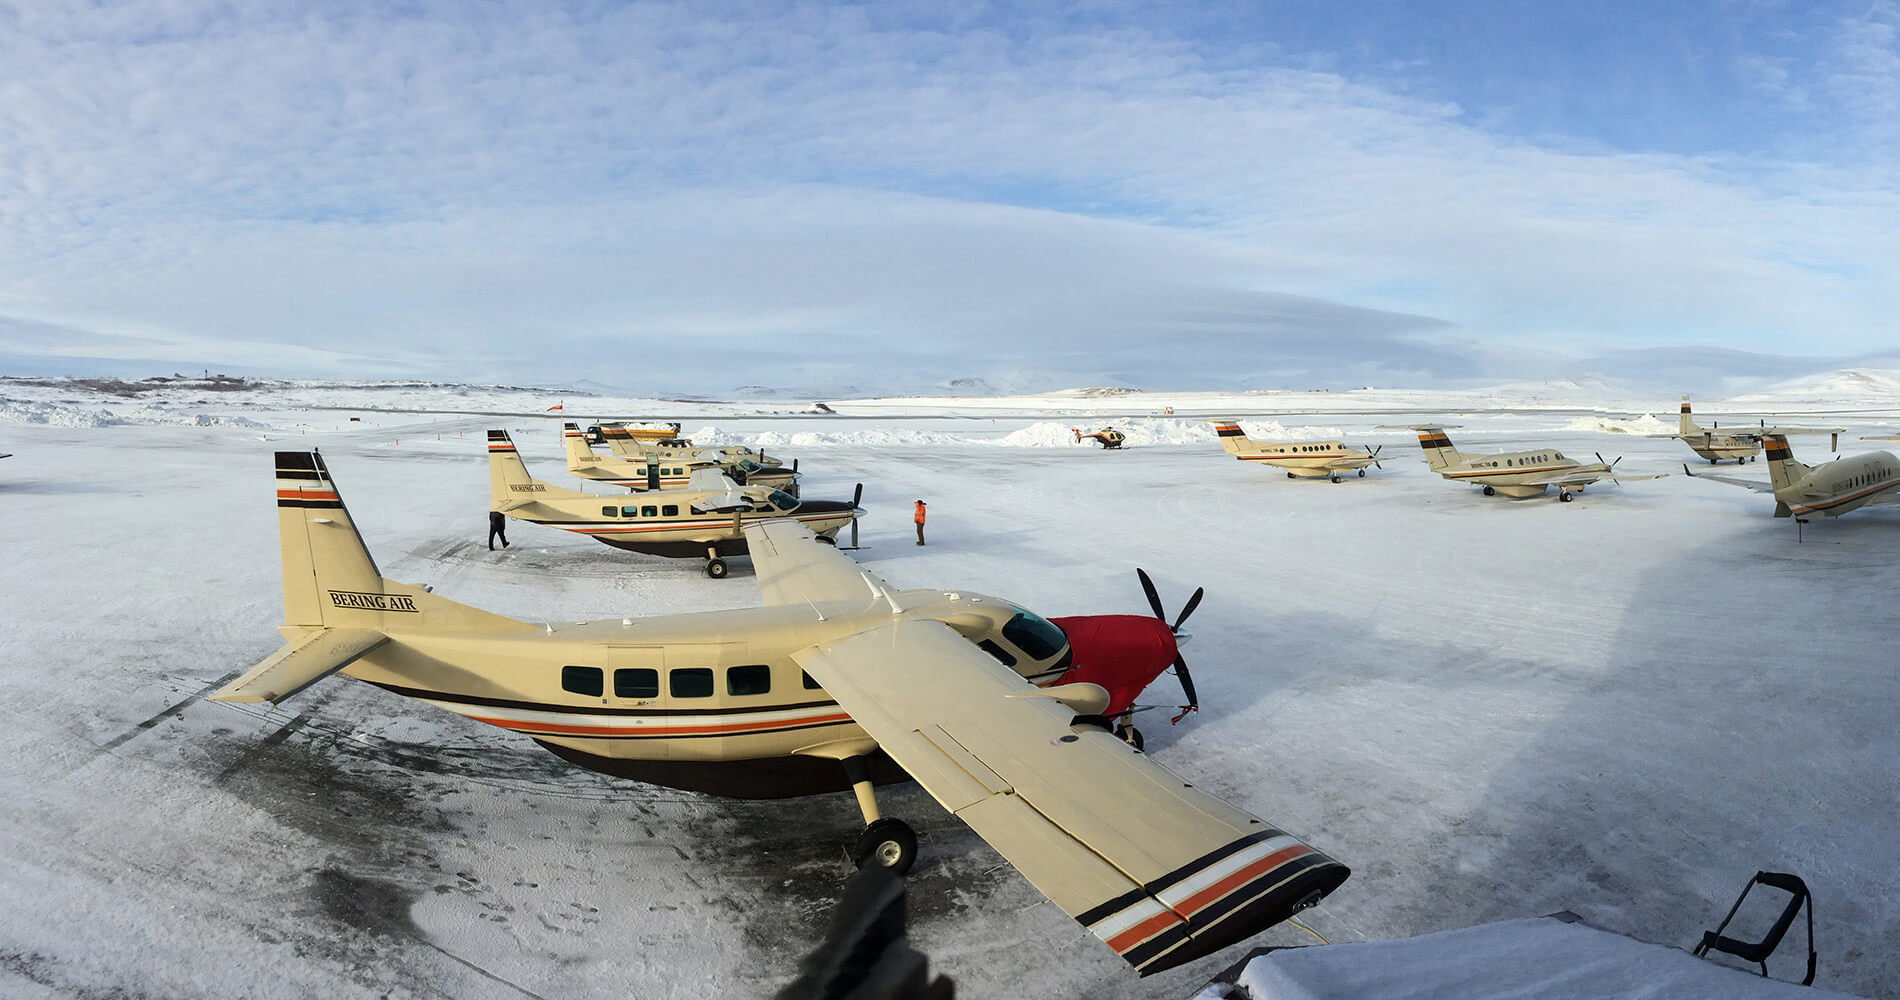 Rows of Cessna Caravans on a snowy ramp